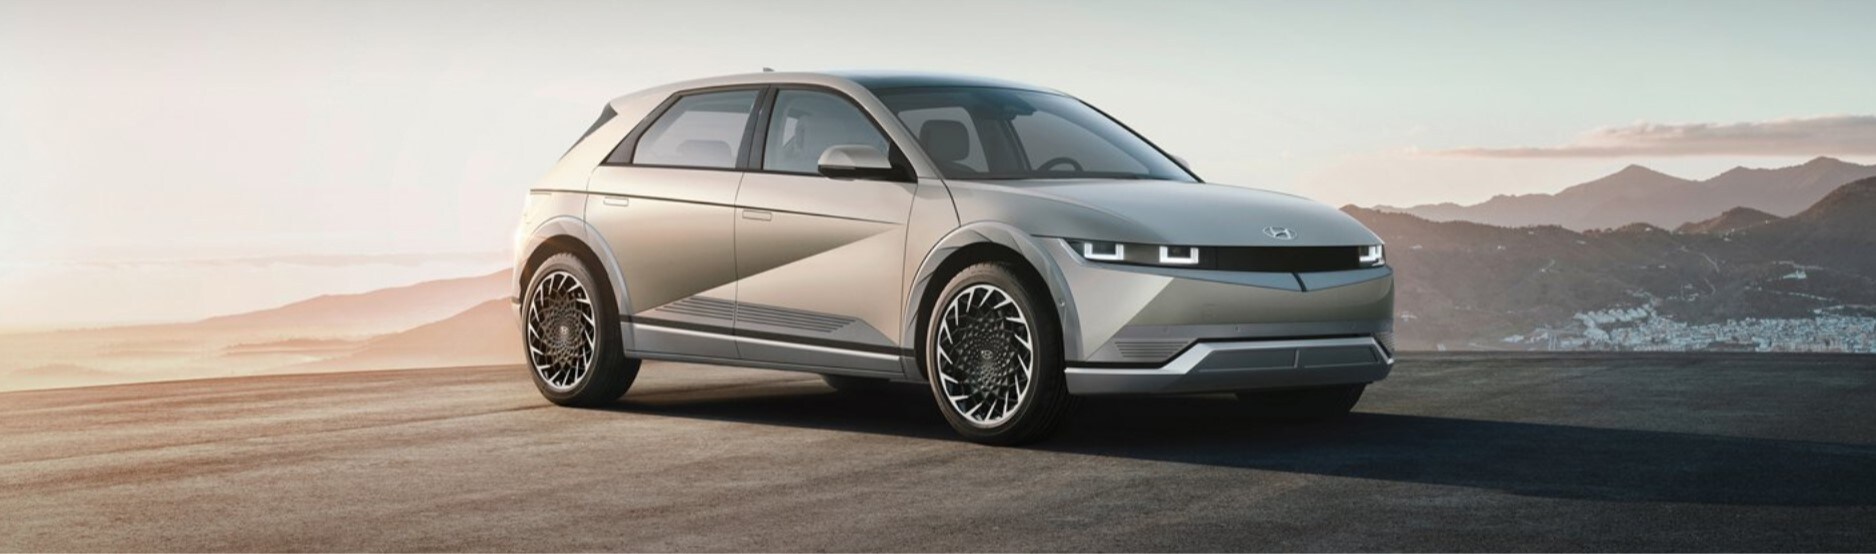 2022 Hyundai Ioniq 5: Debut of the Hyundai 45 EV Concept | Phil Long